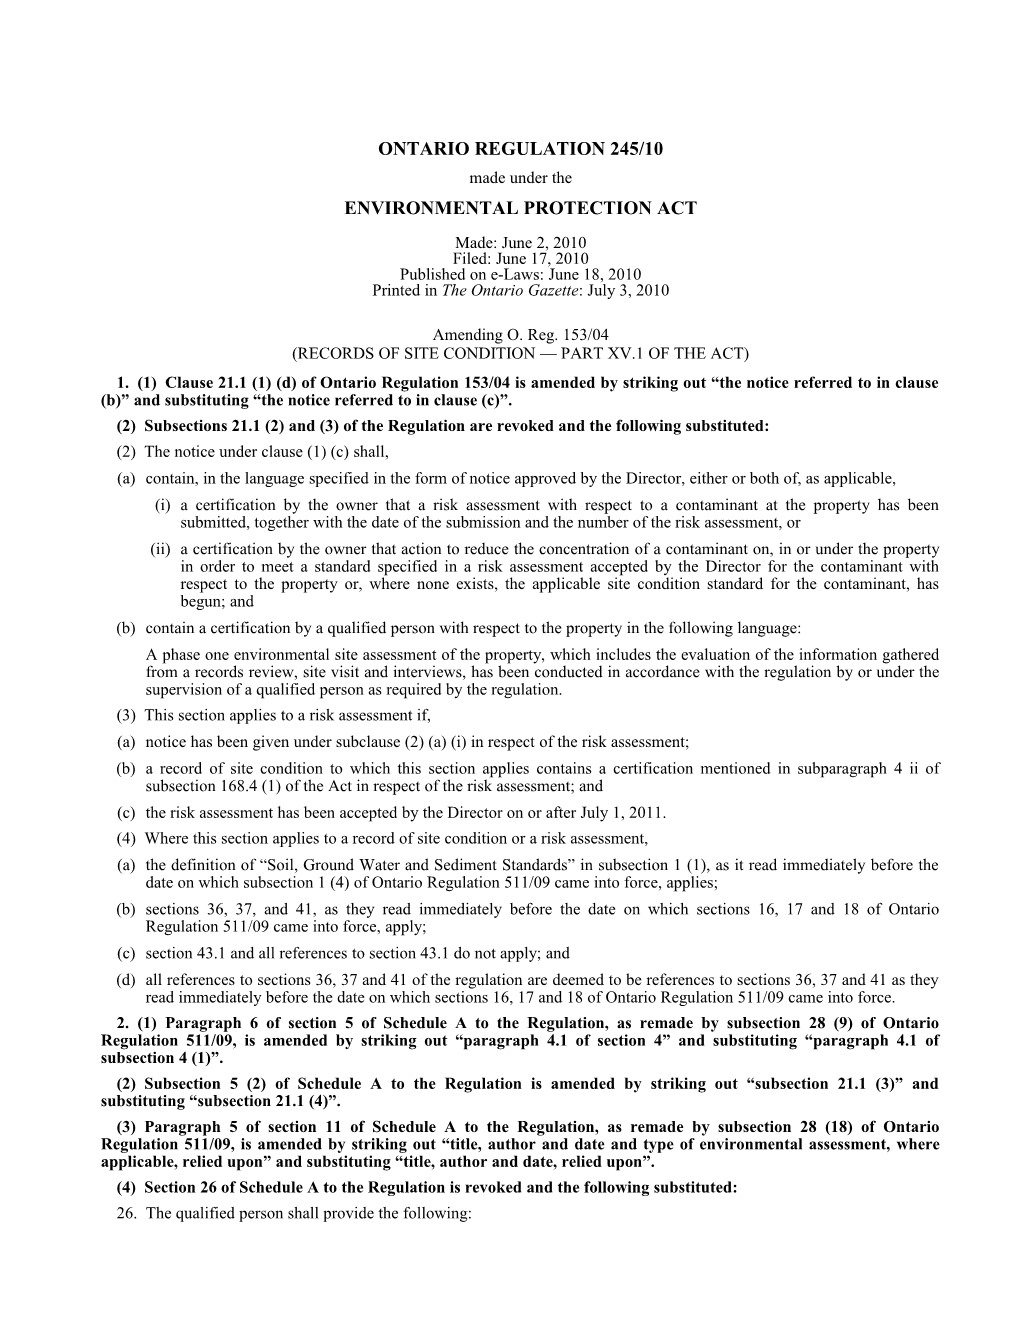 ENVIRONMENTAL PROTECTION ACT - O. Reg. 245/10